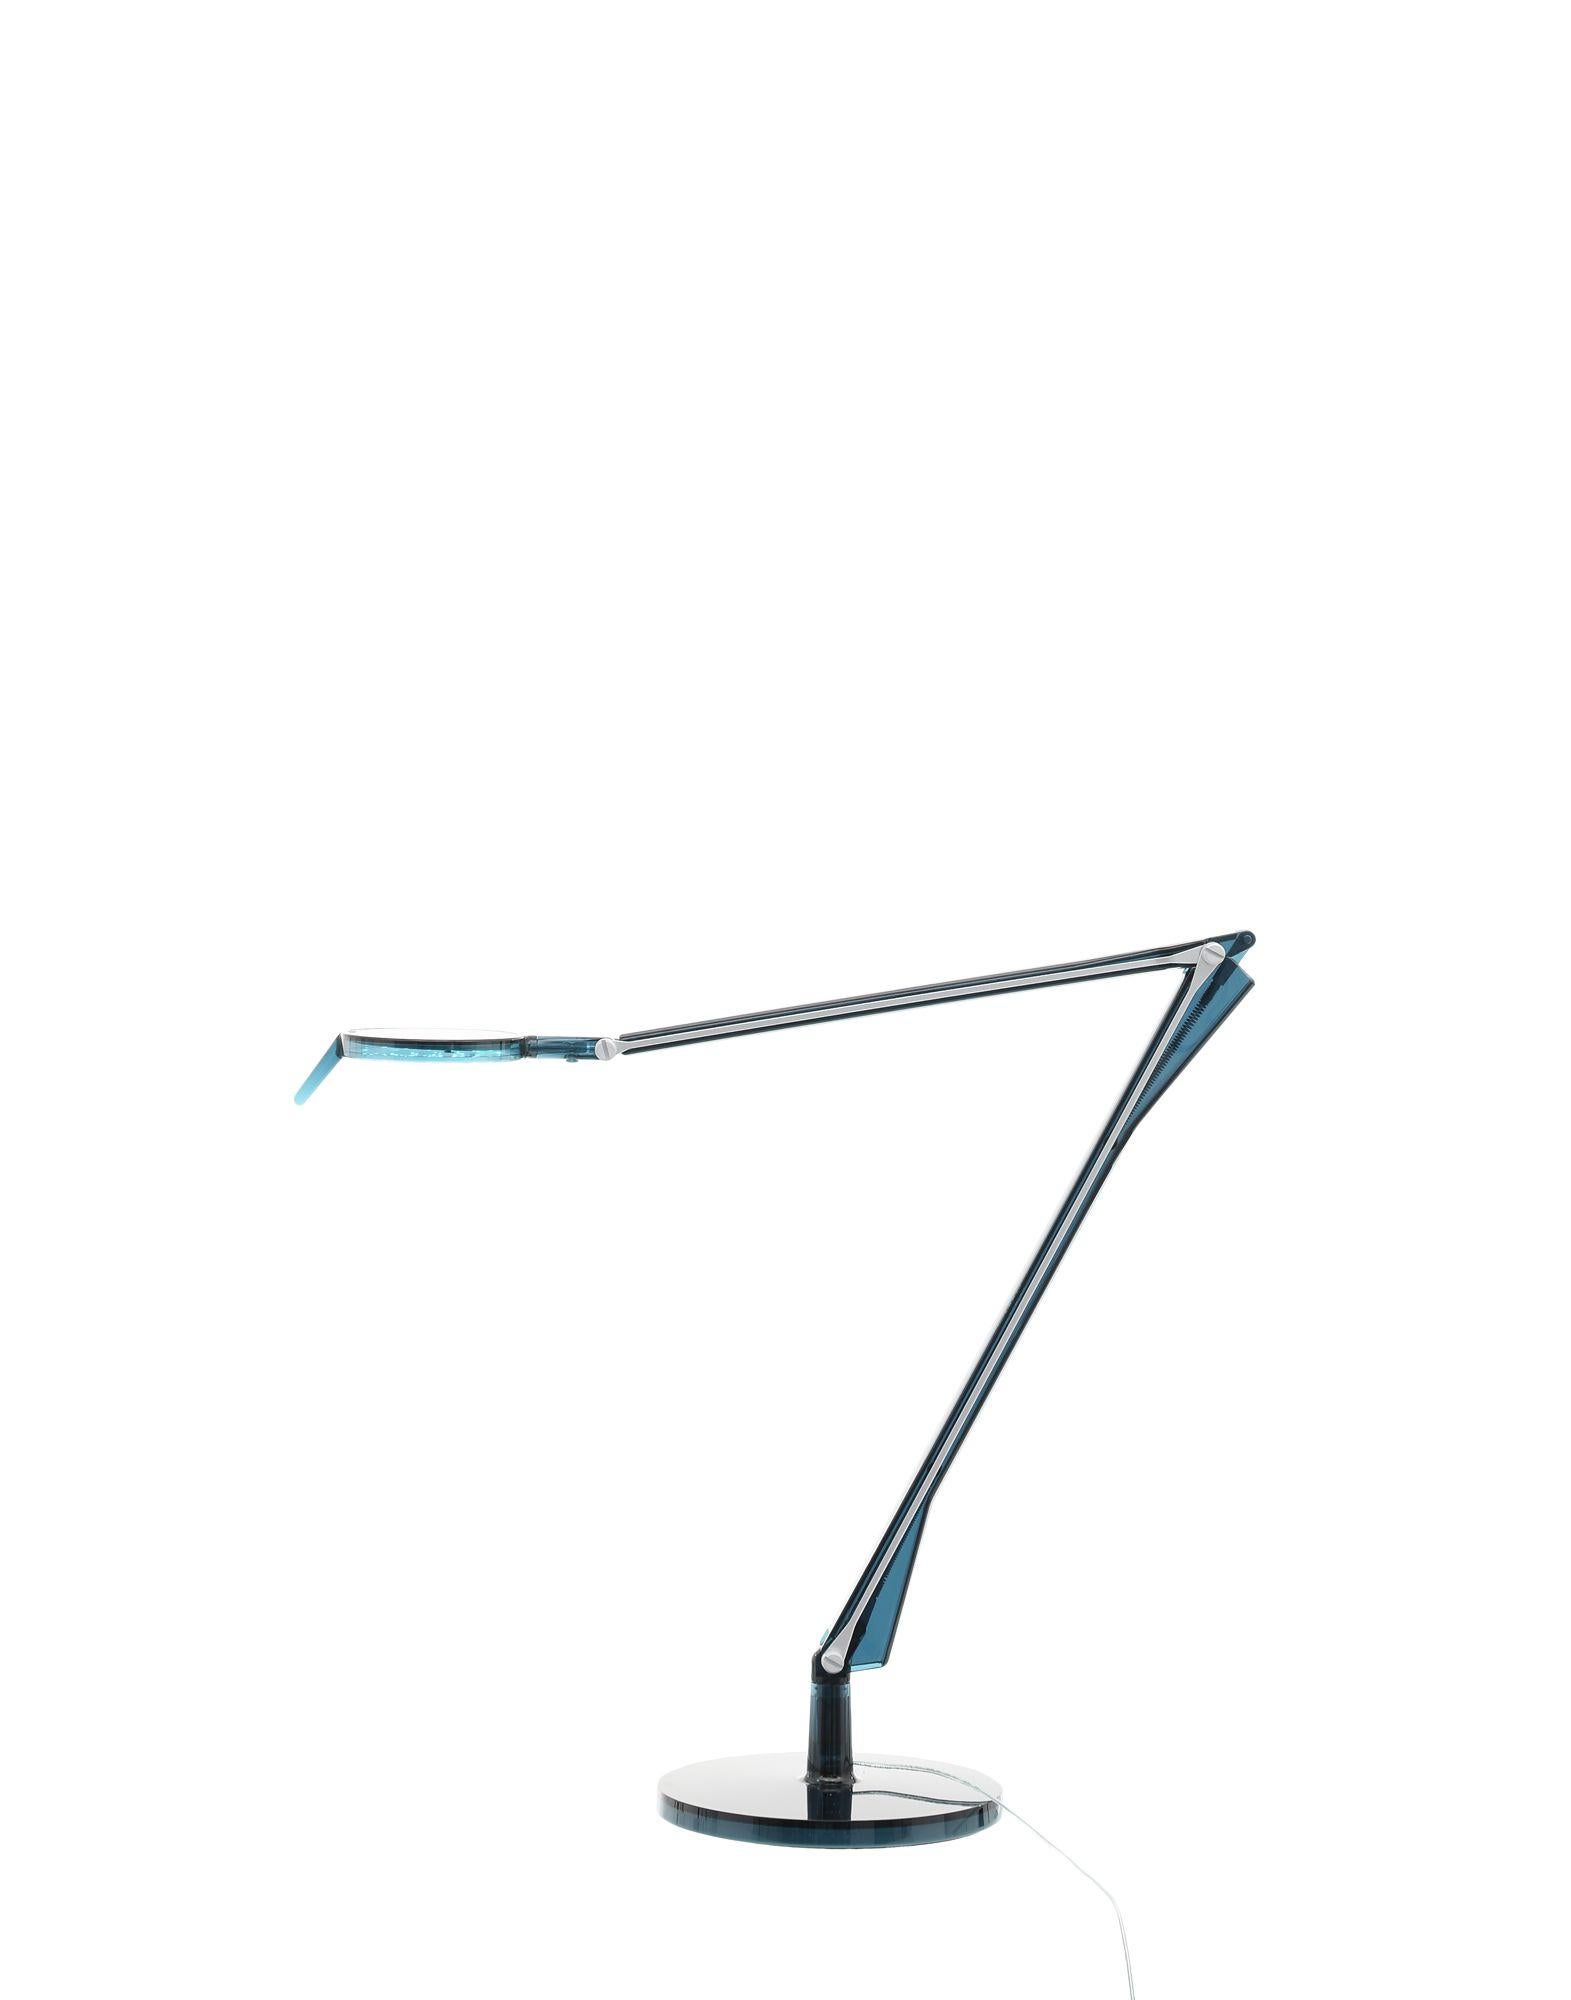 Kartell Aledin Dec Desk Lamp in Blue by Alberto e Francesco Meda In New Condition For Sale In Brooklyn, NY